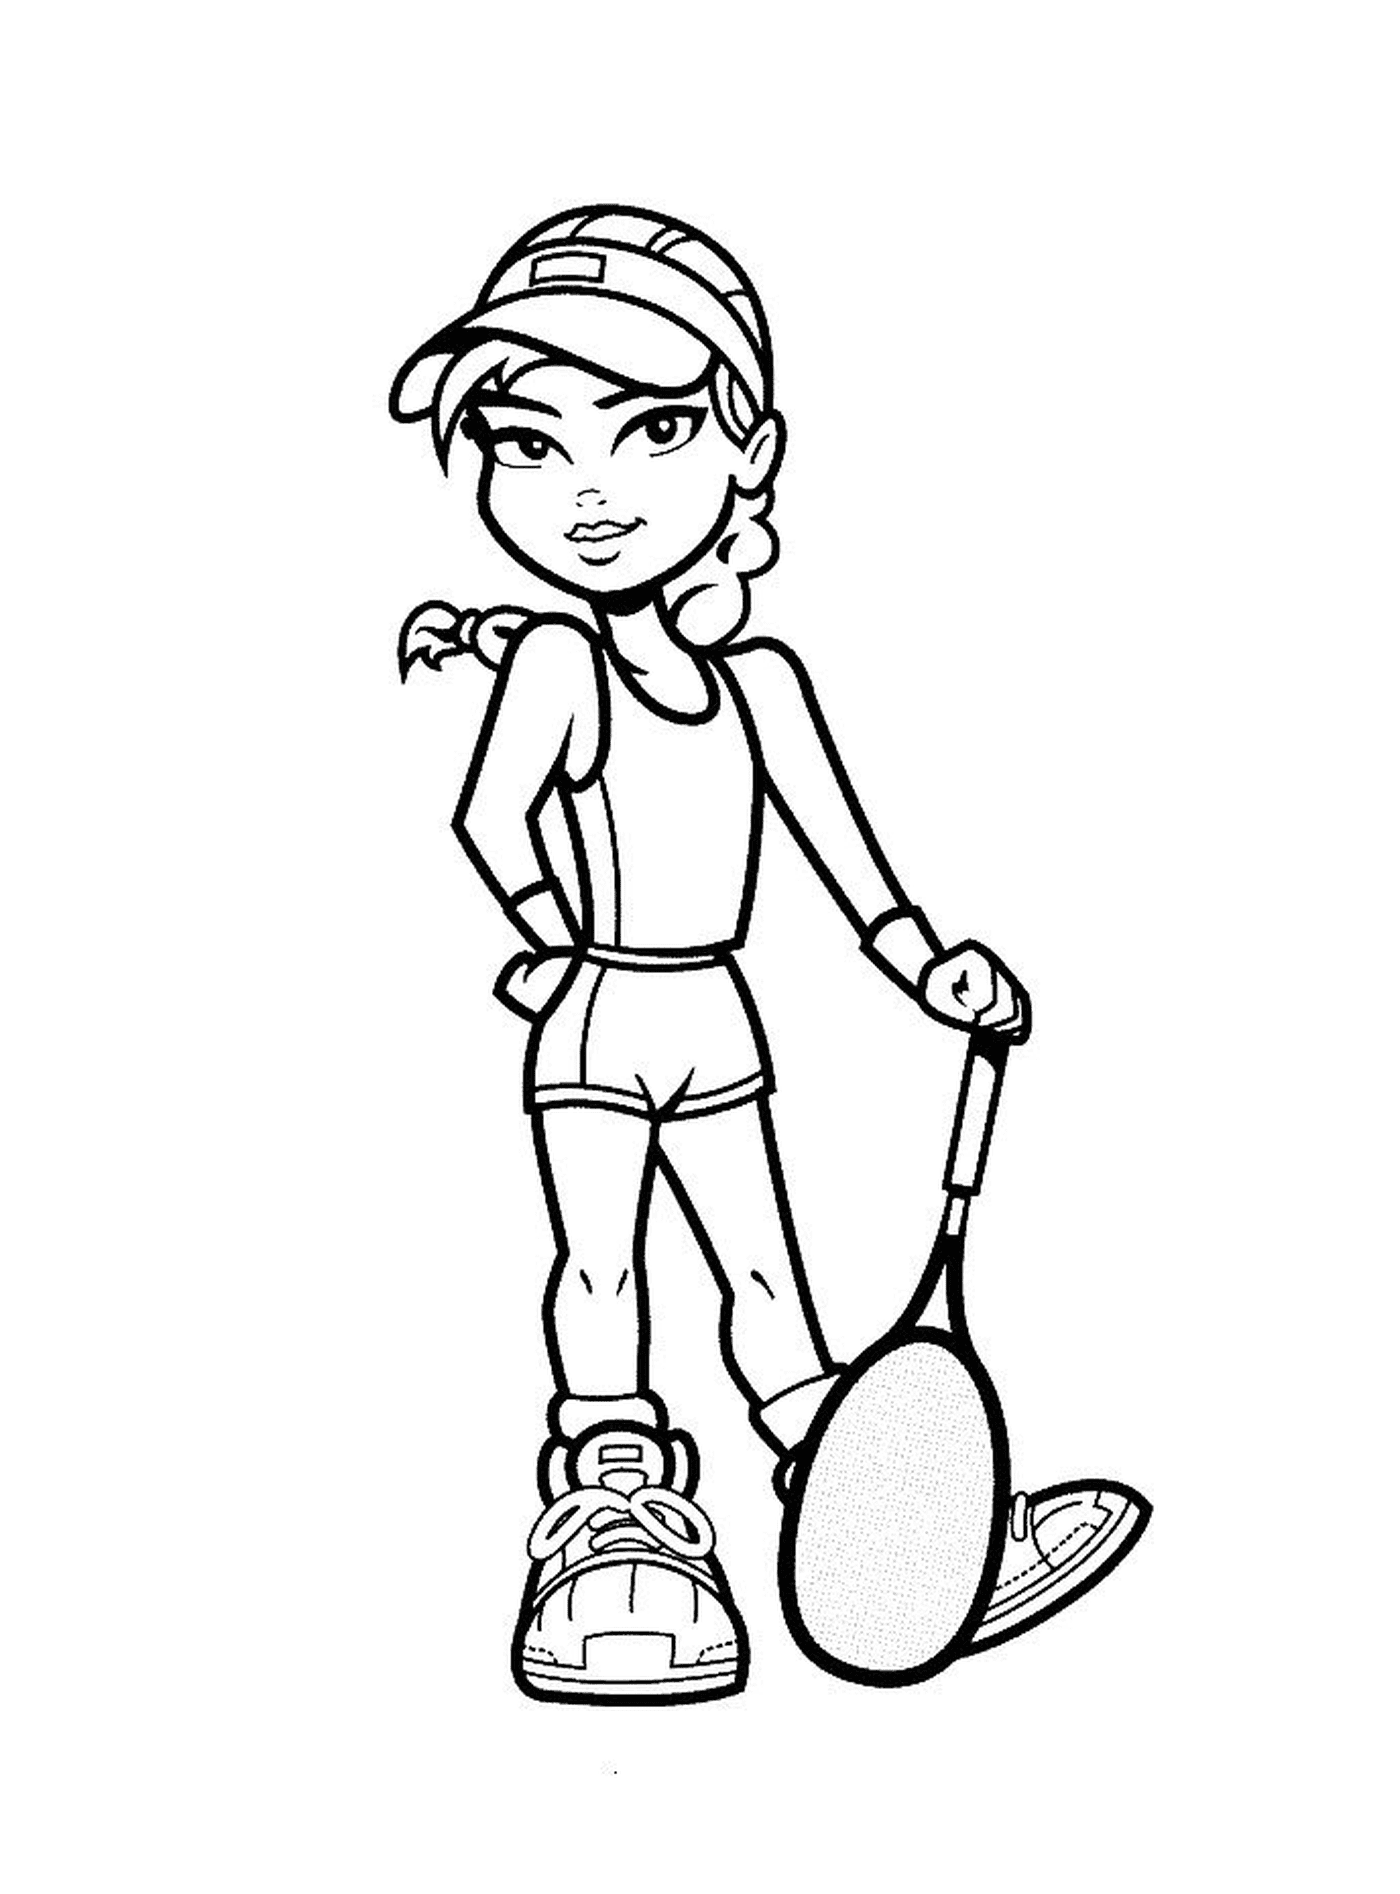  Una chica juega al tenis 